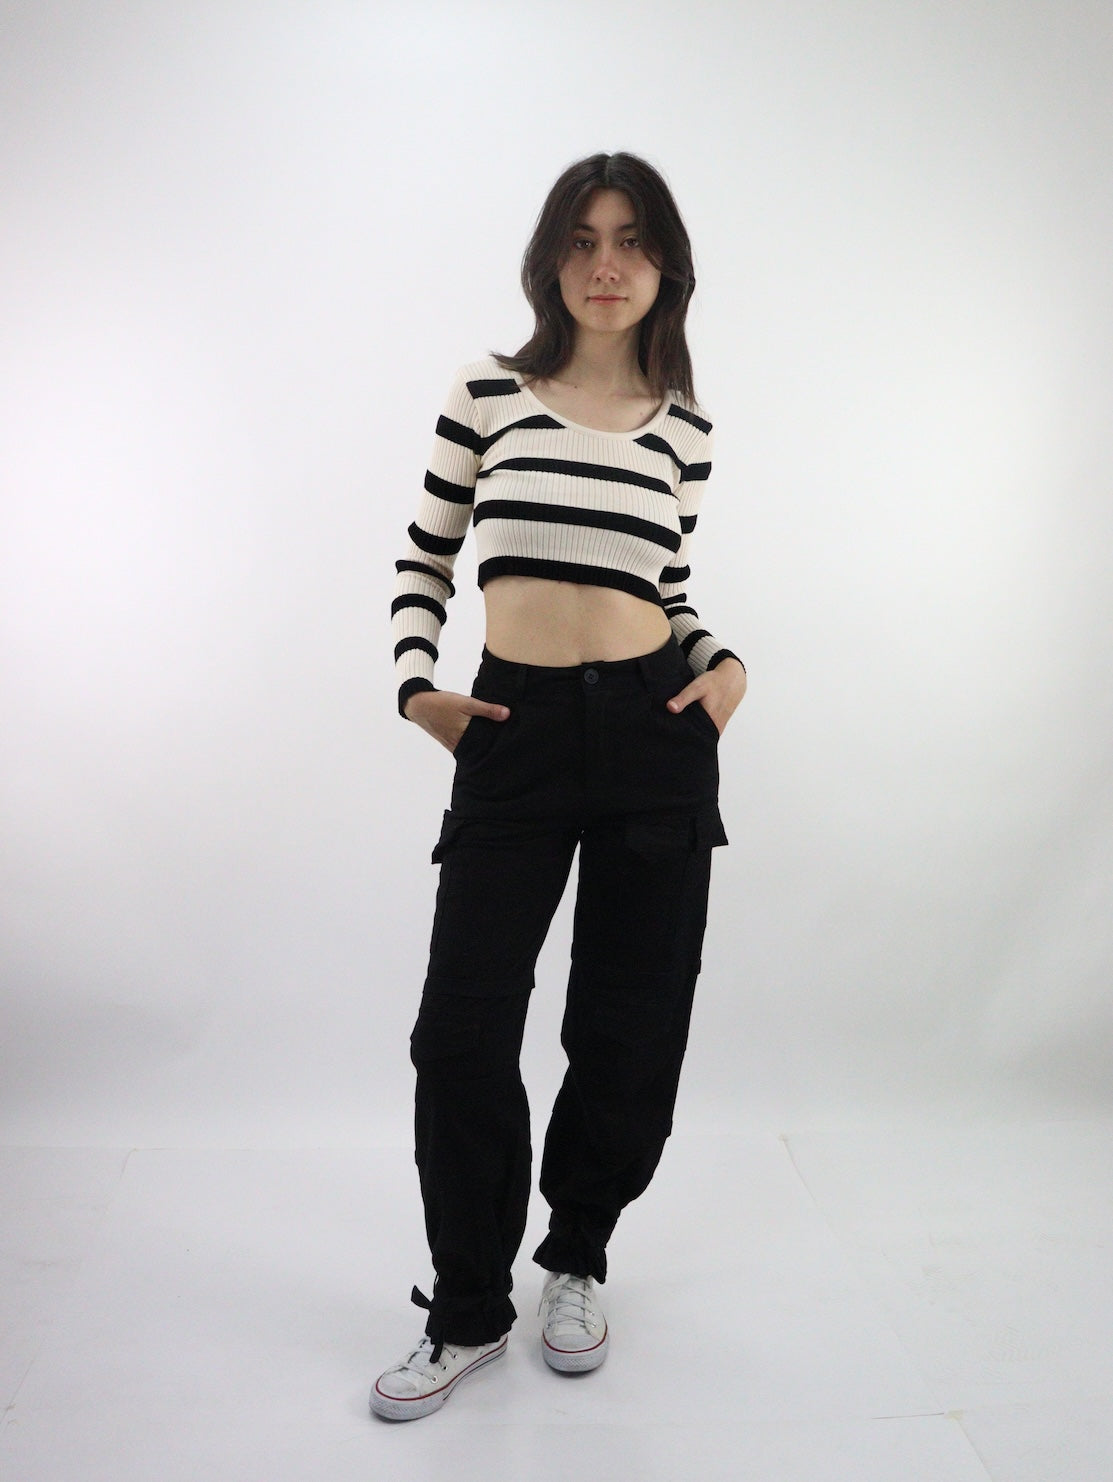 Pantalón cargo de tela stretch color negro (NUEVA TEMPORADA)